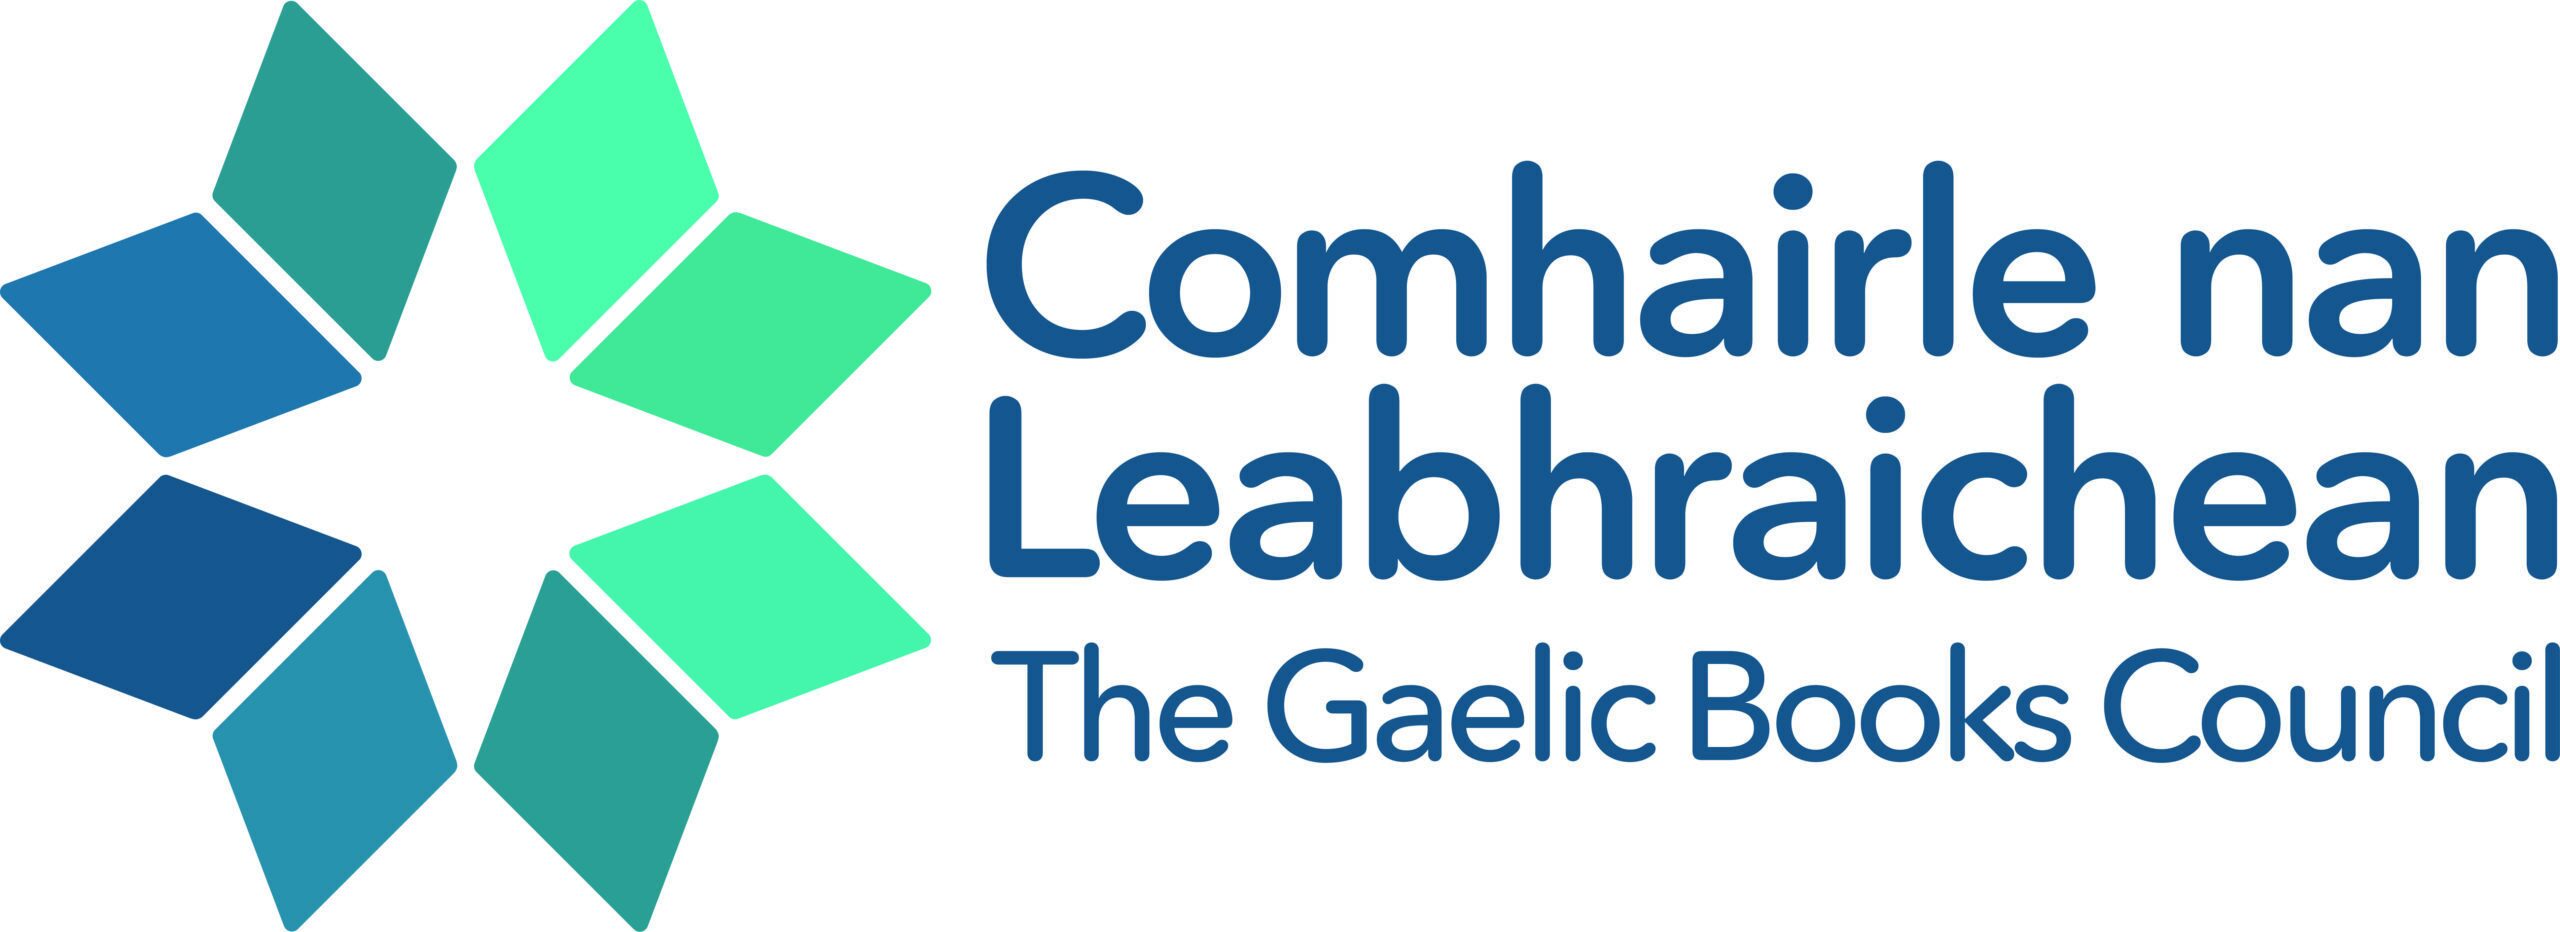 Gaelic Books Council 1